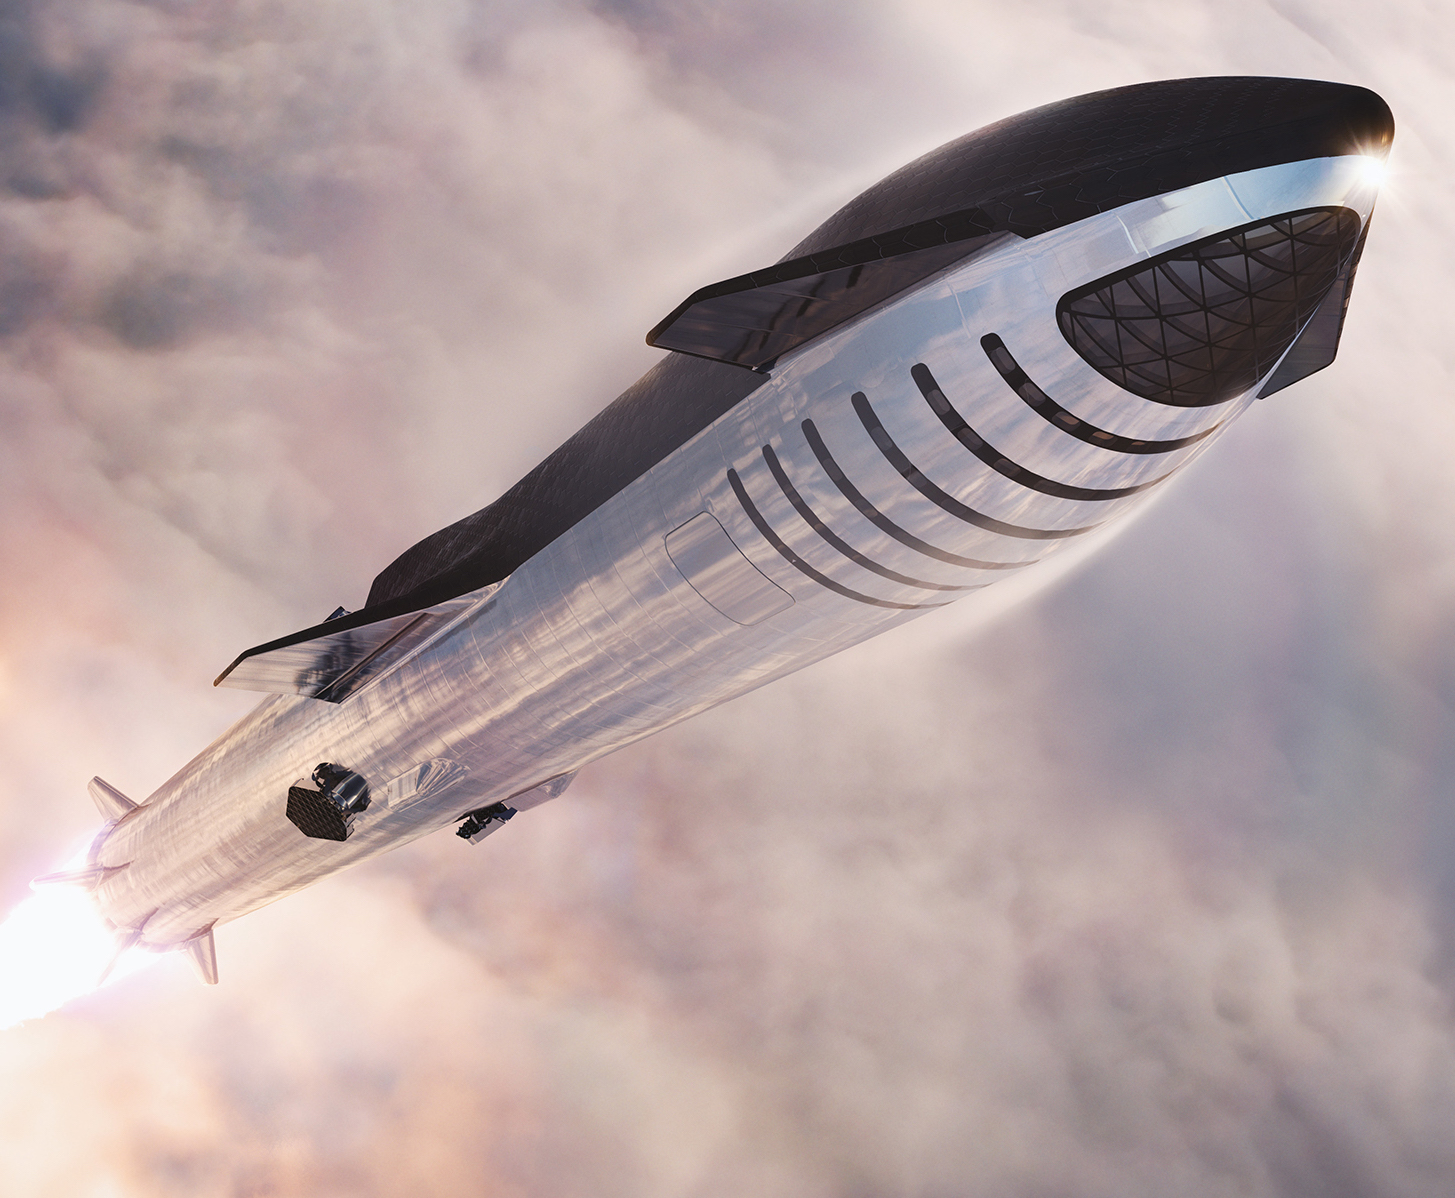 Original Space render of Starship in flight.